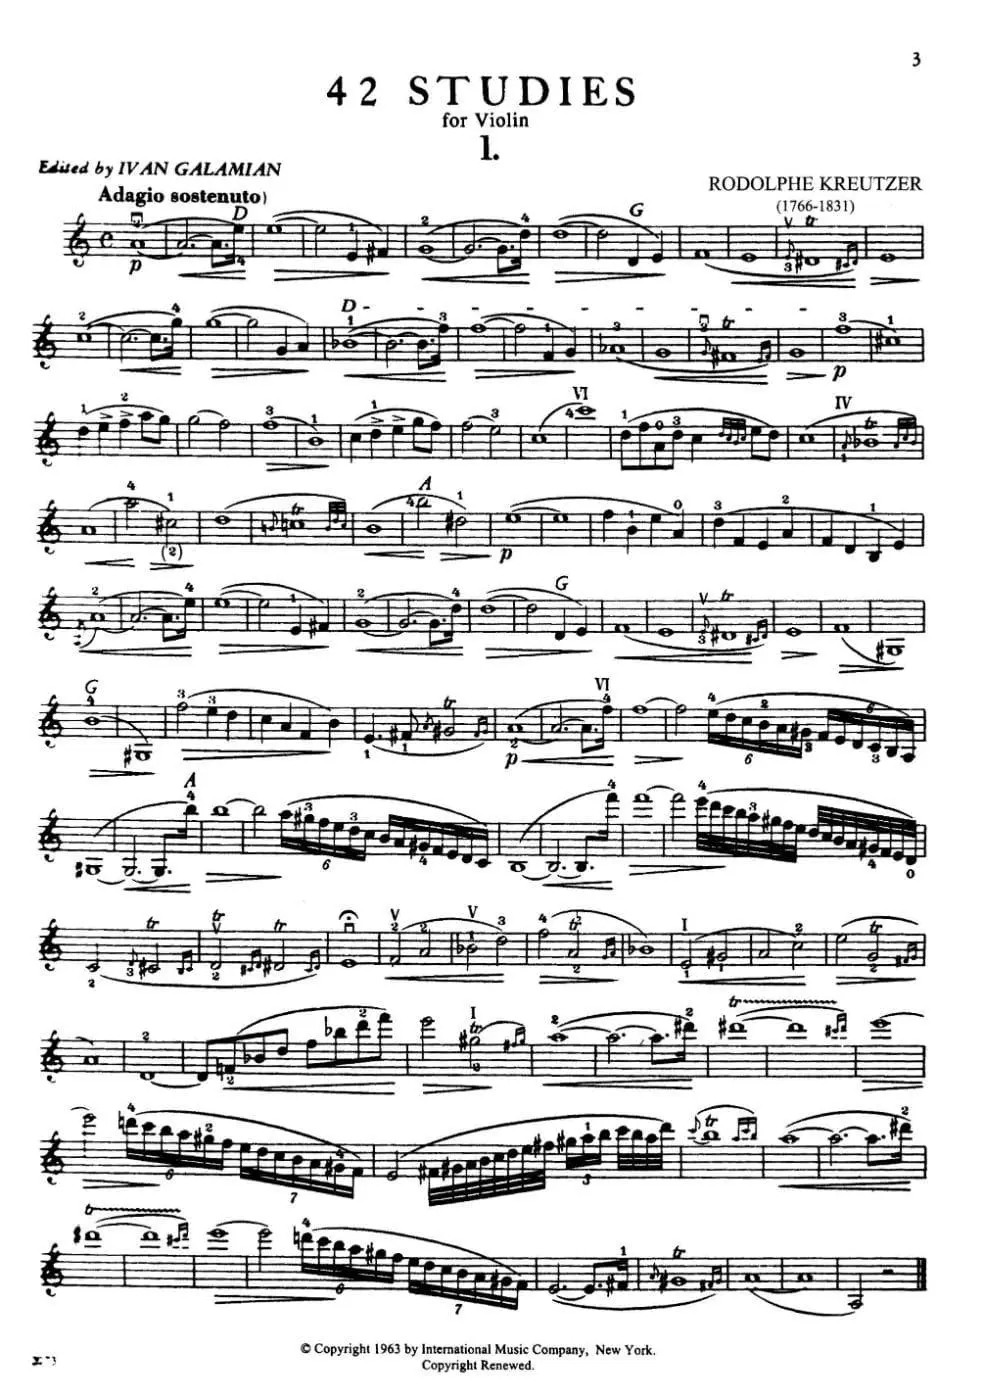 kreutzer violin studies - How many Kreutzer etudes are there